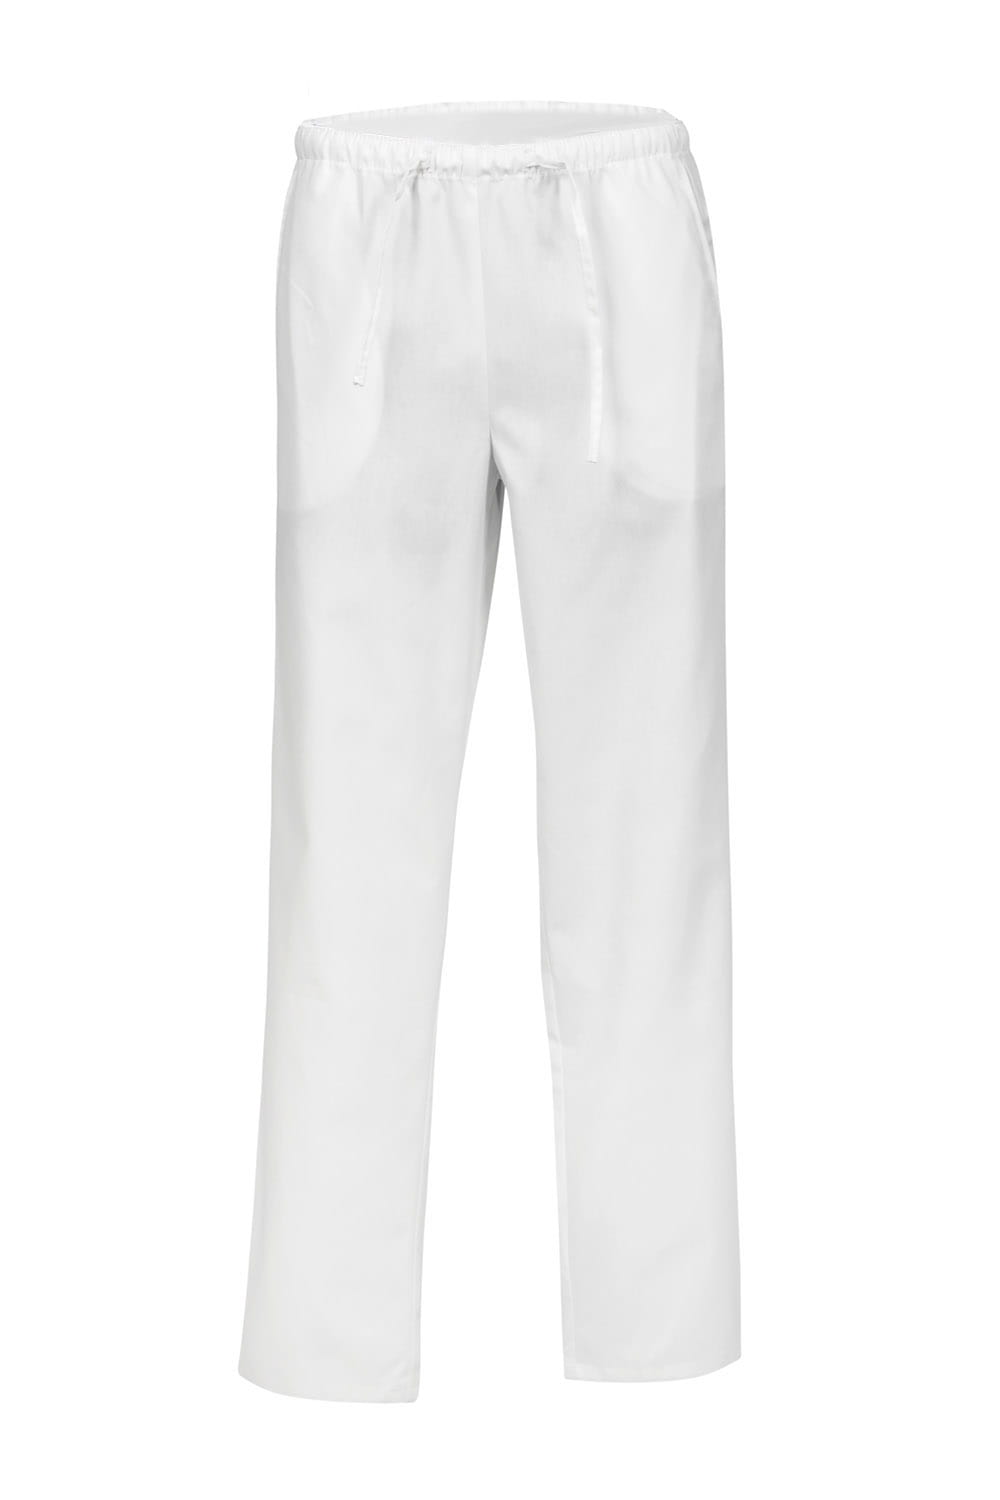 Kuchárske Nohavice Biele #1